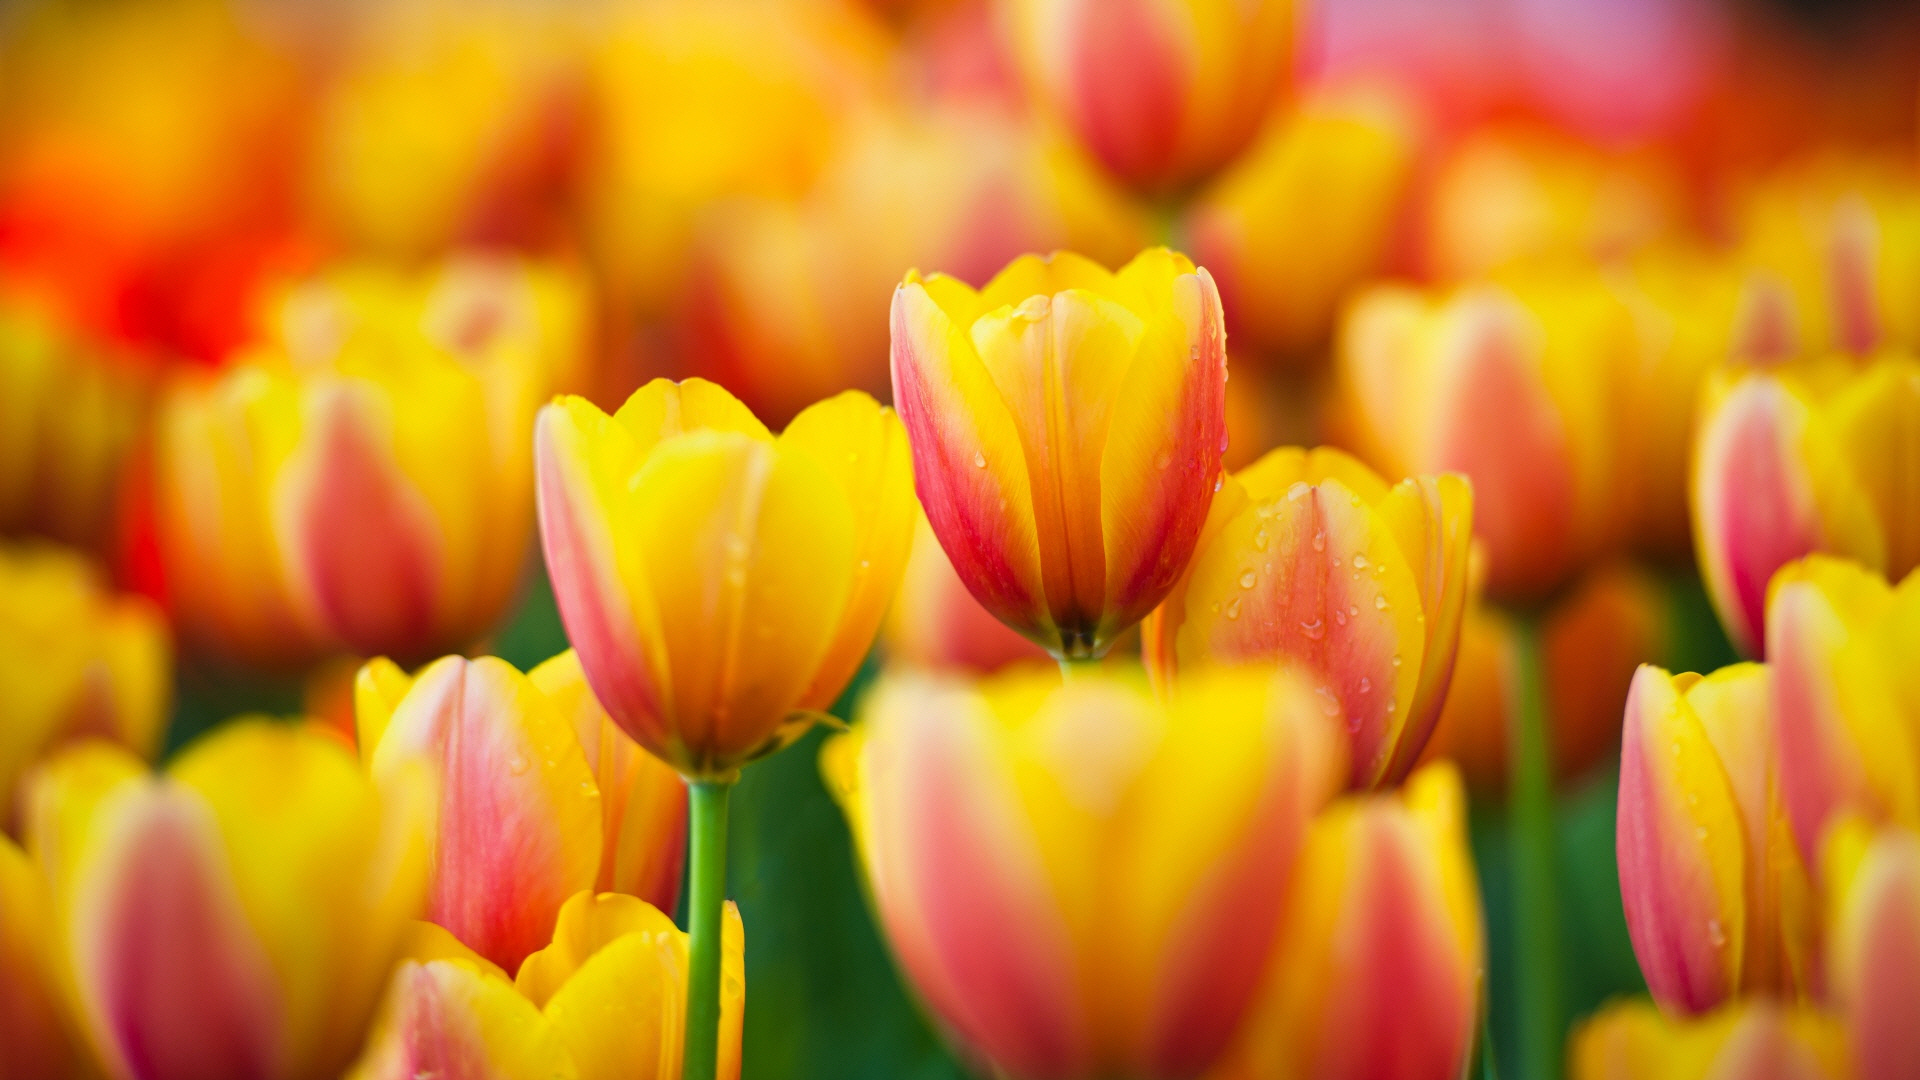 yellow_pink_tulips-wallpaper-1920x1080.jpg